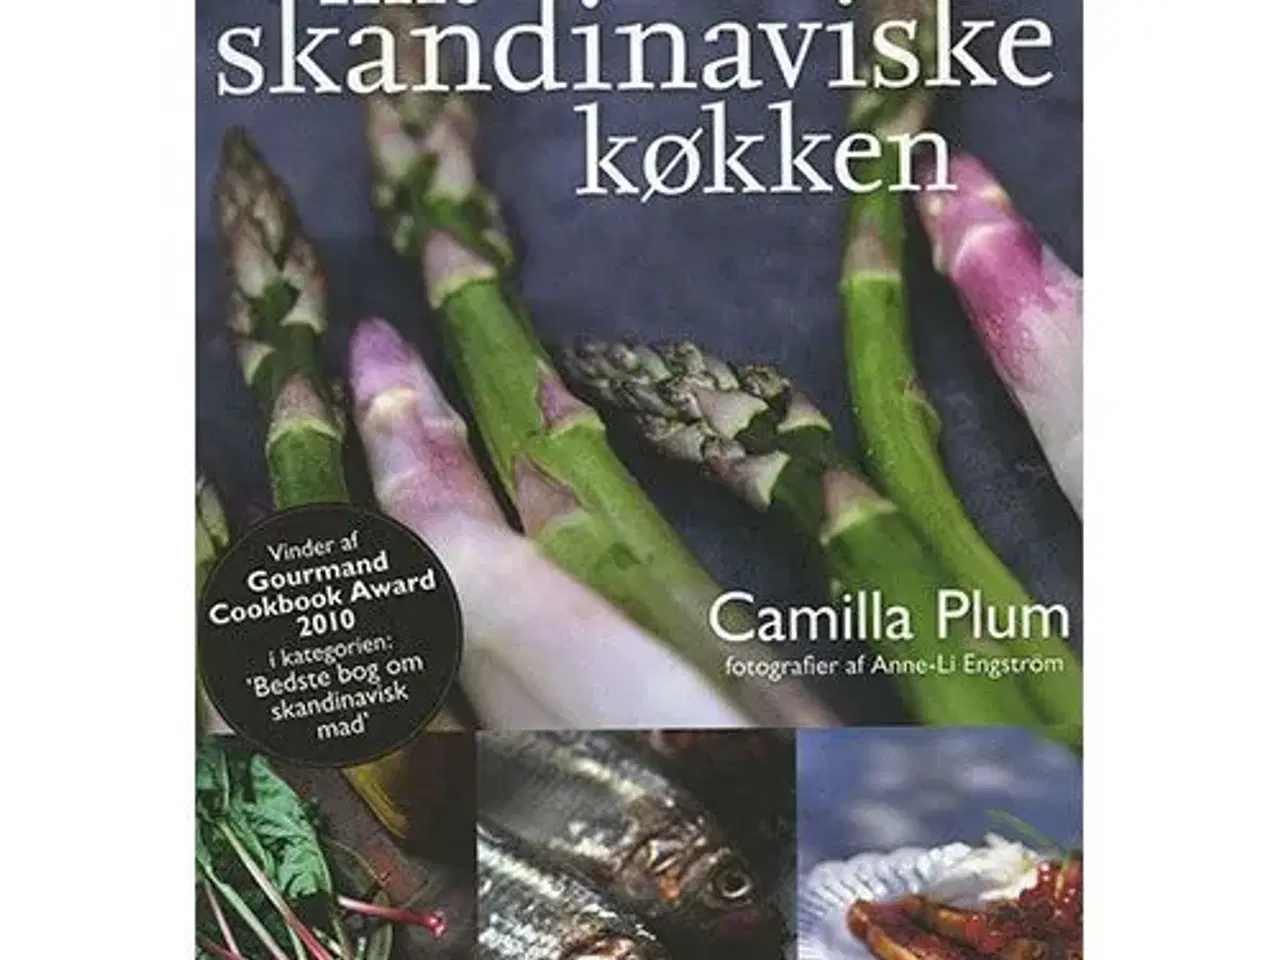 Billede 1 - Mit skandinaviske køkken - Camilla Plum